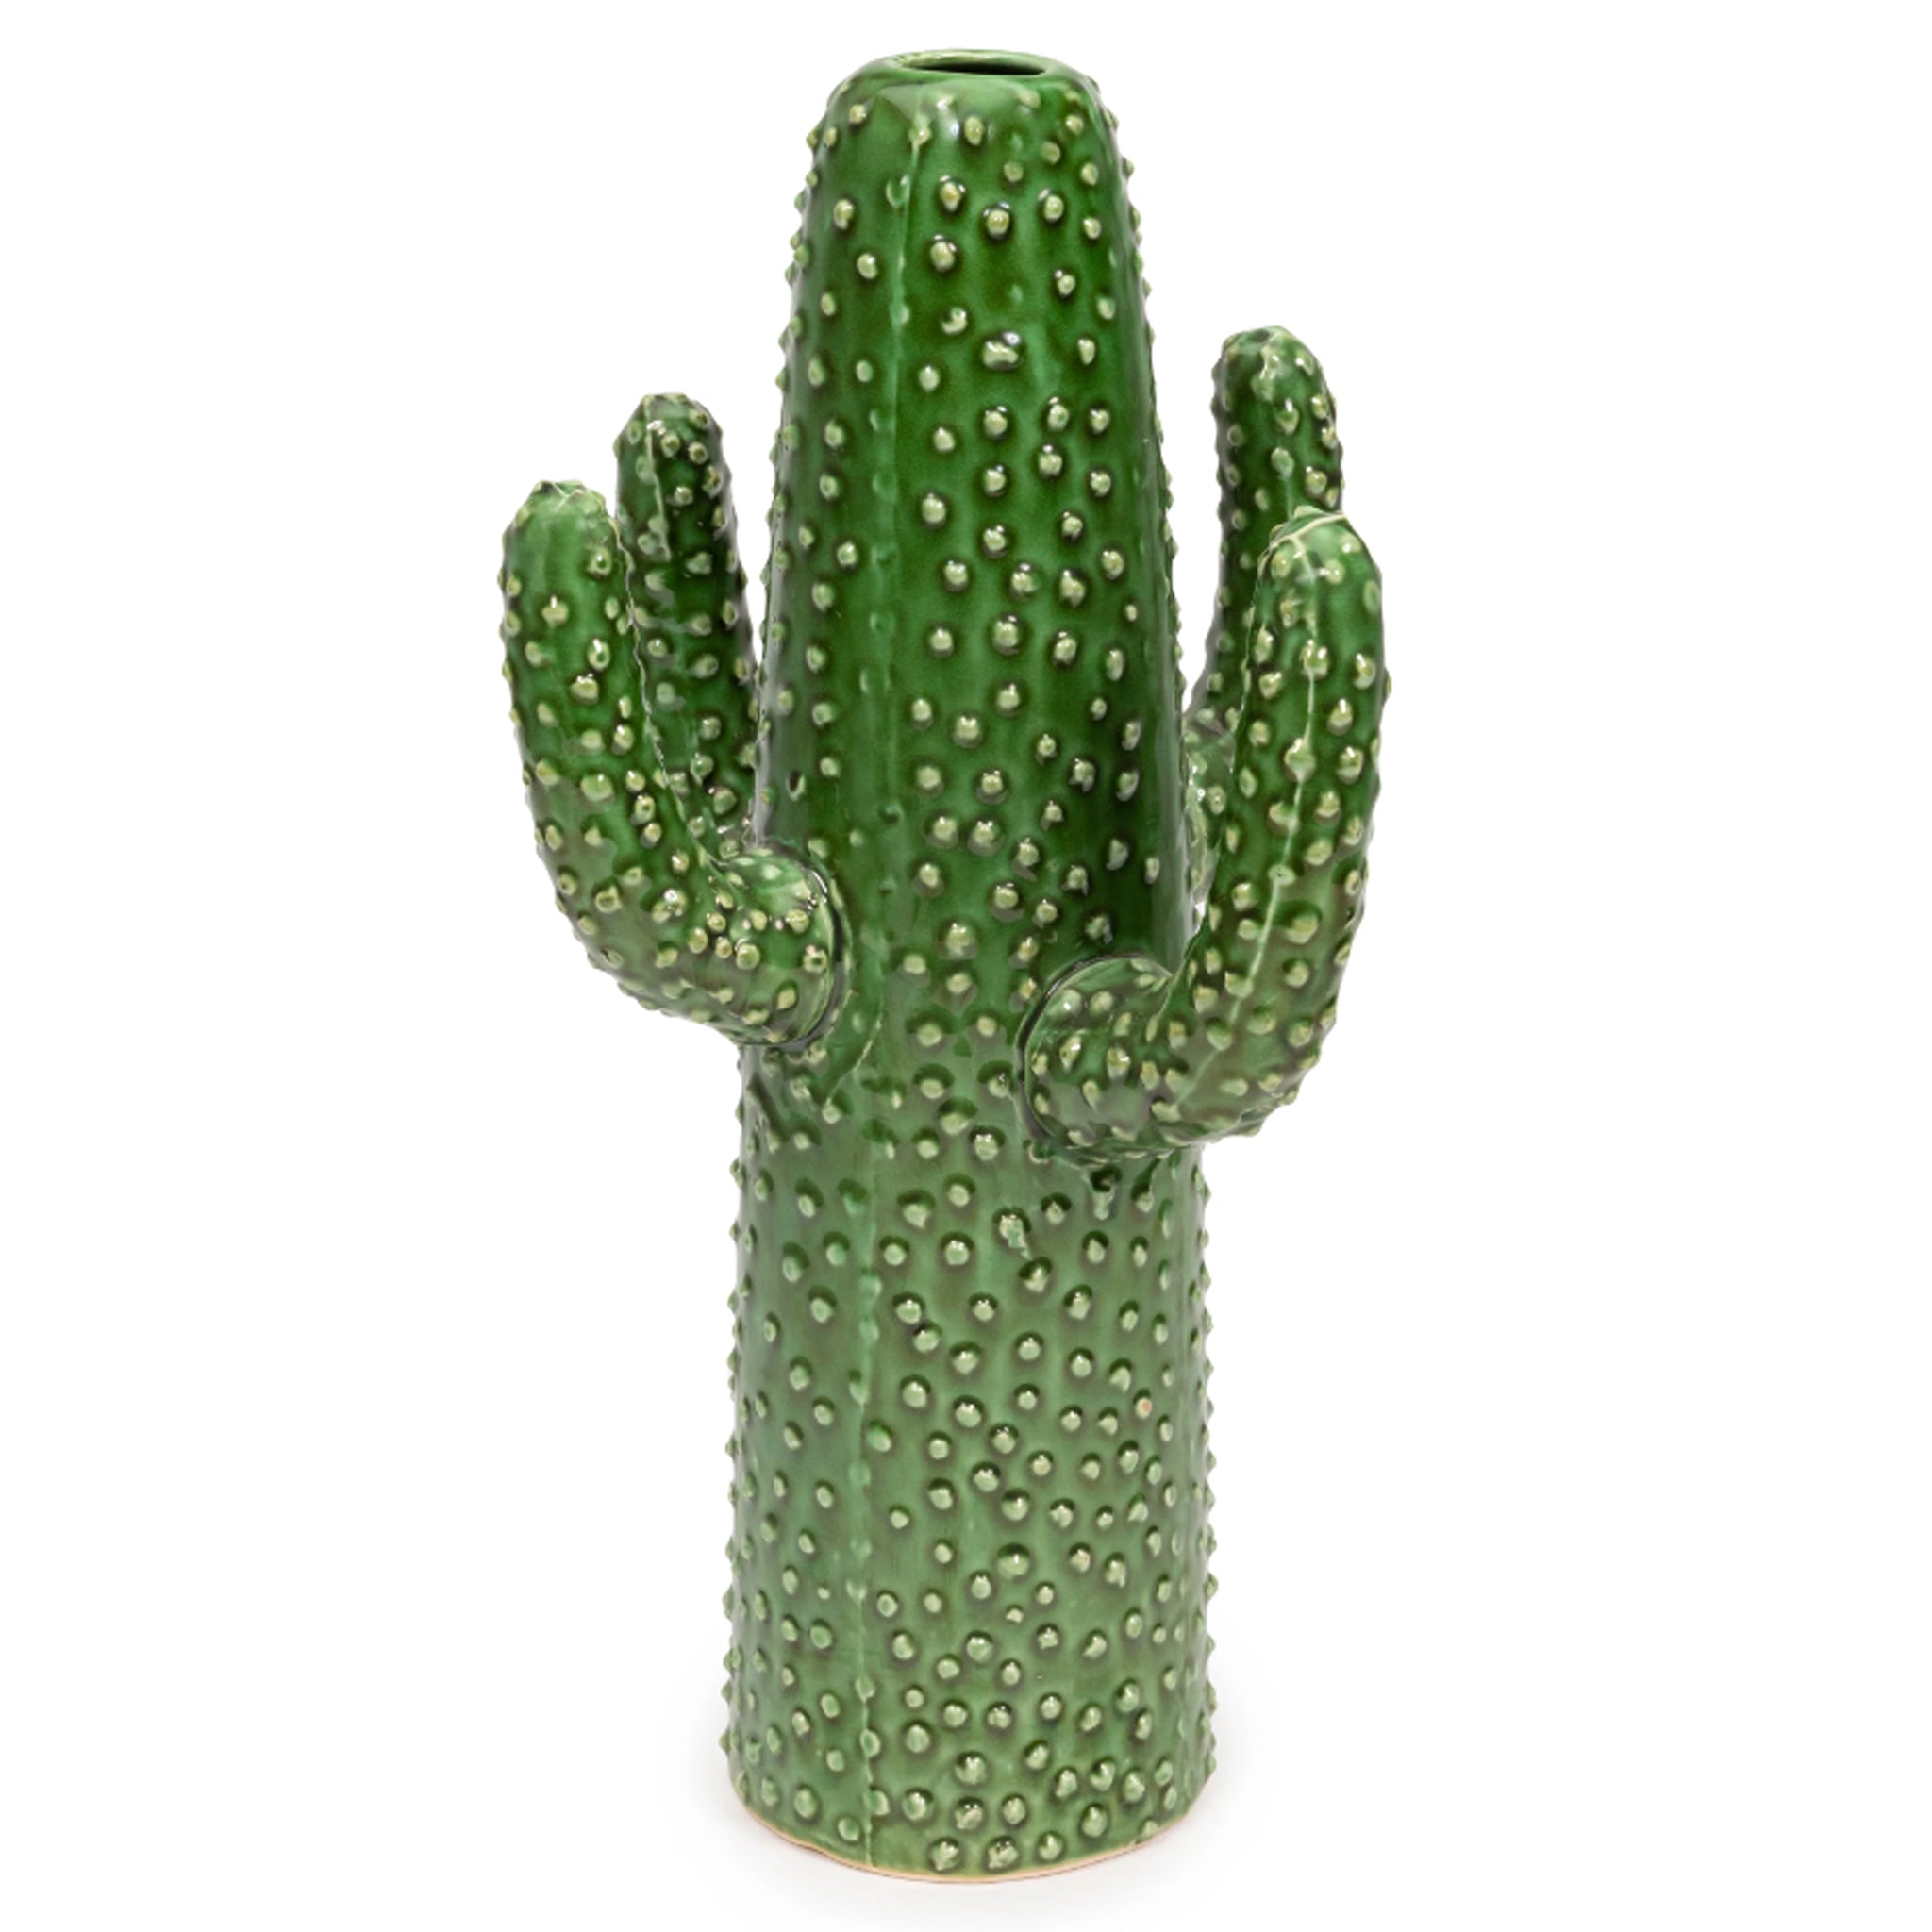 【SERAX/セラックス】Cactus vase L green Urban jungle